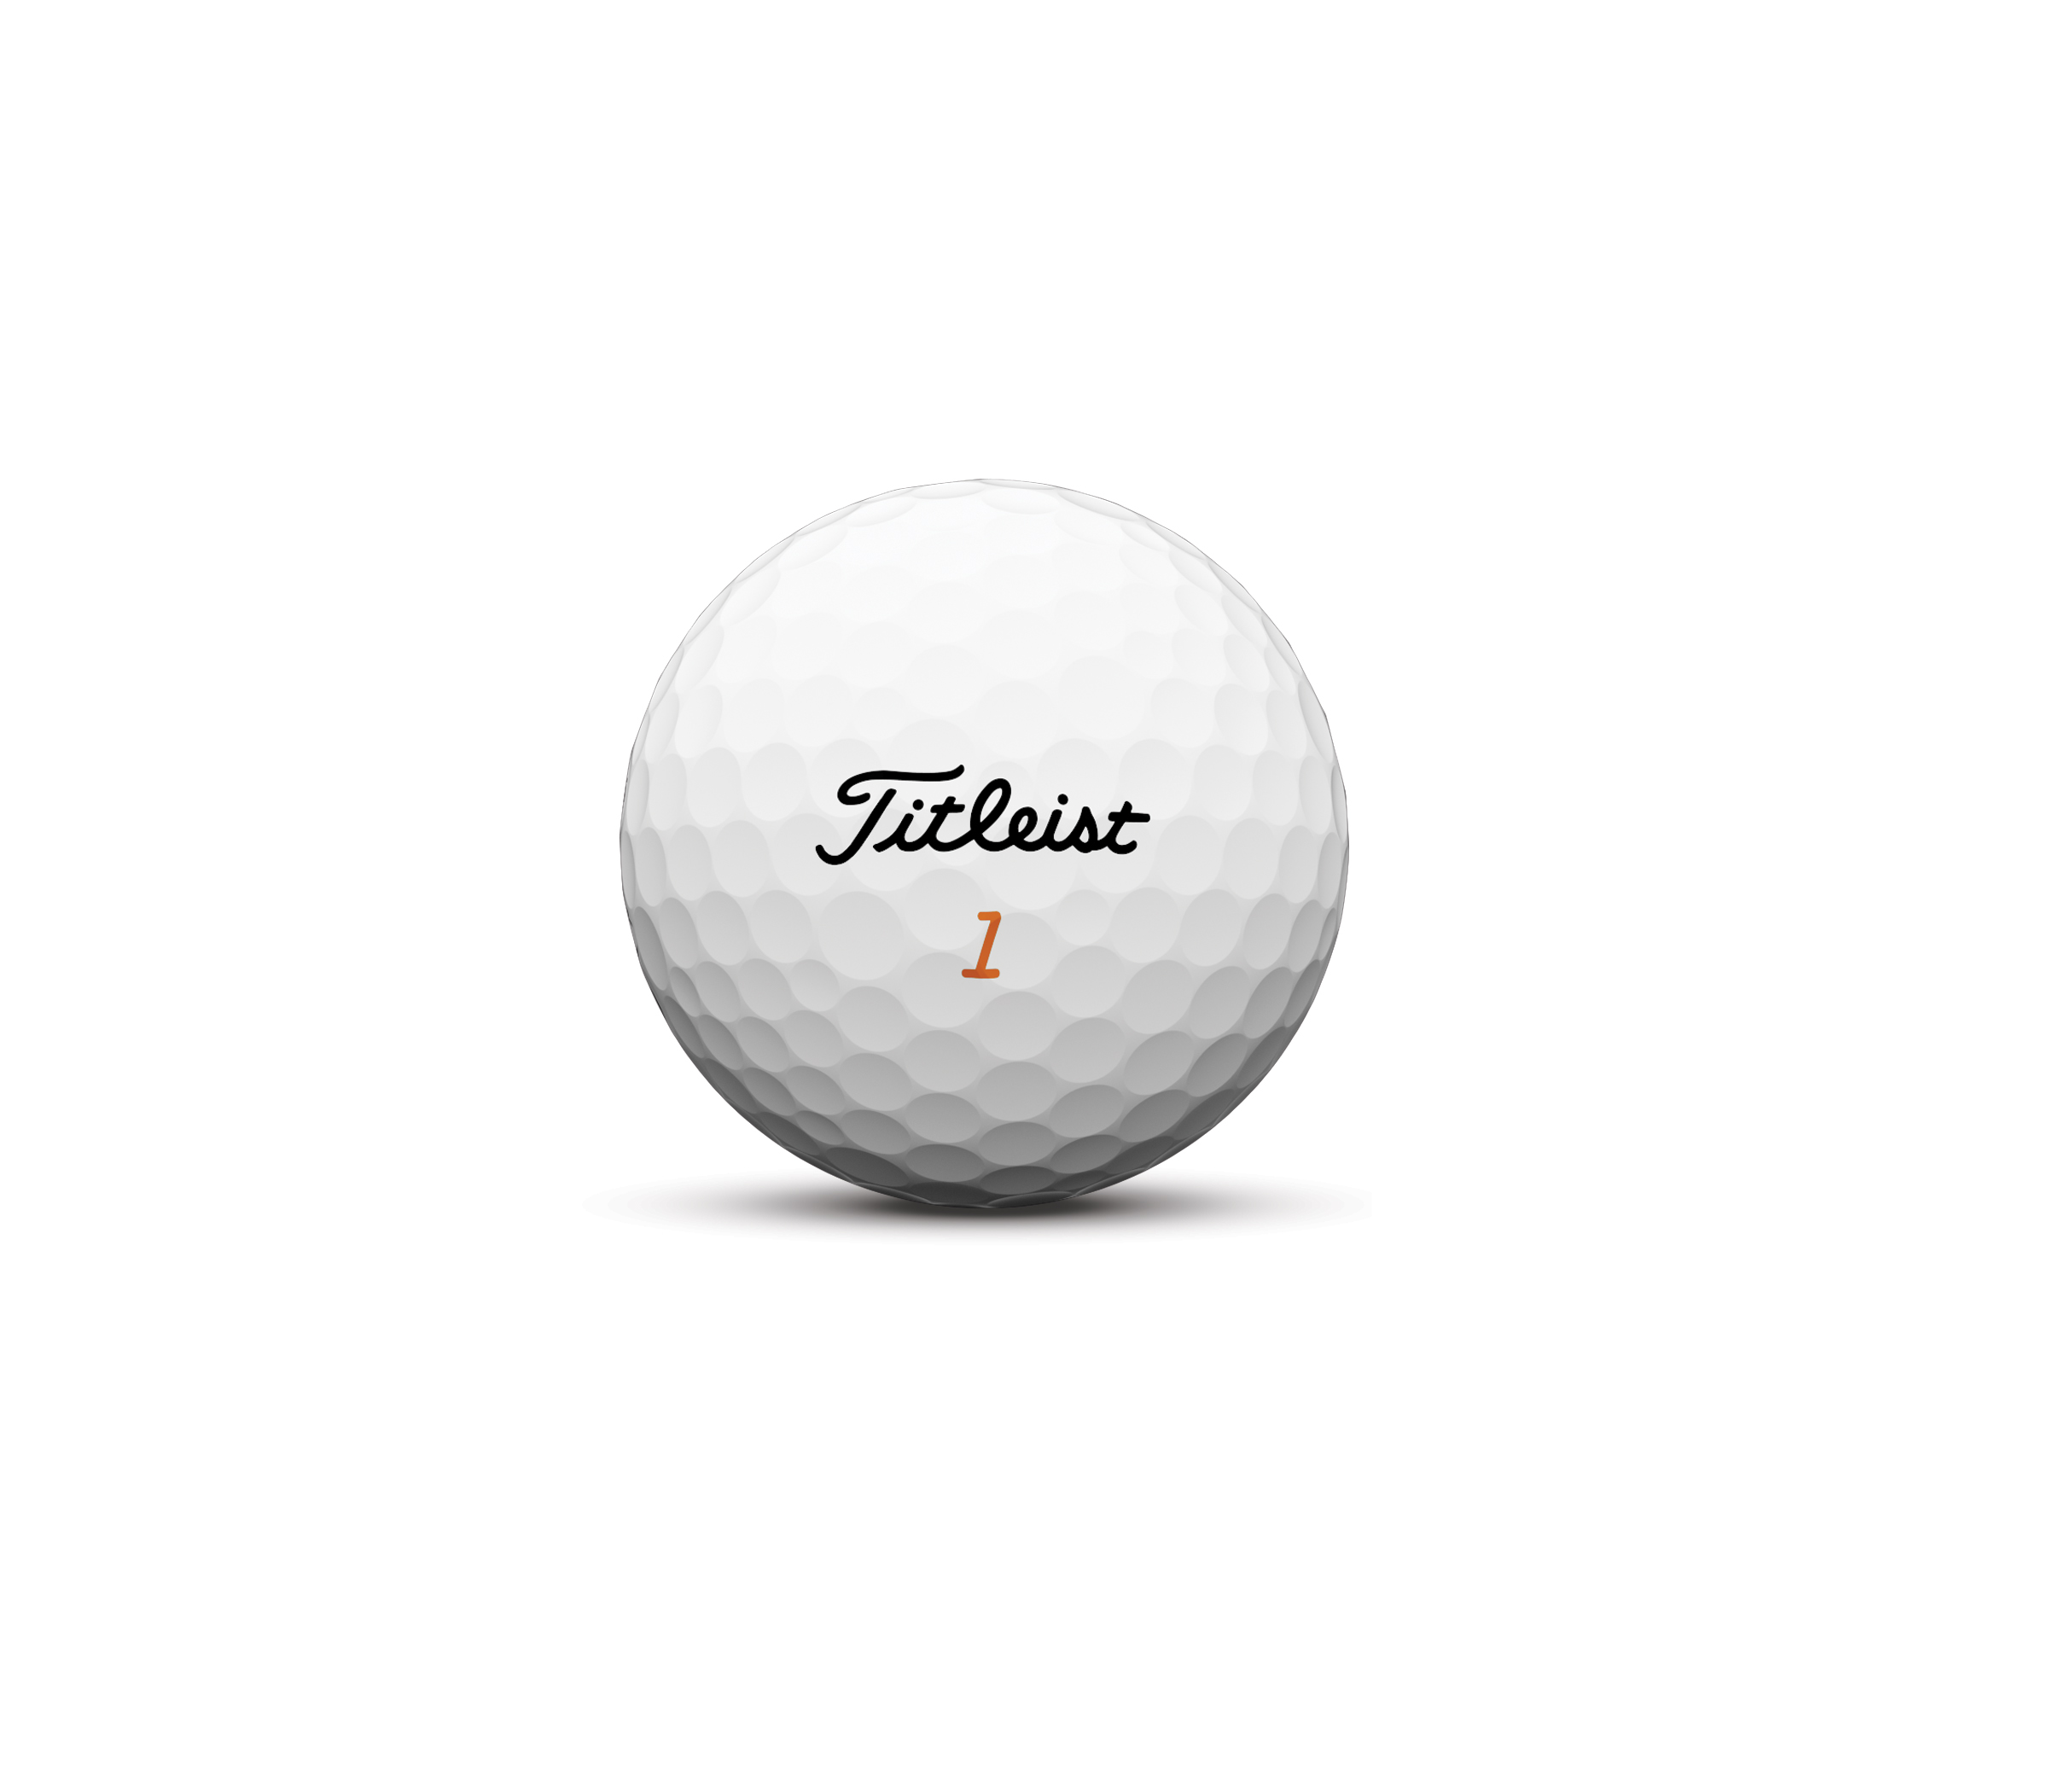 Titleist unveil Tour Soft and Velocity golf balls